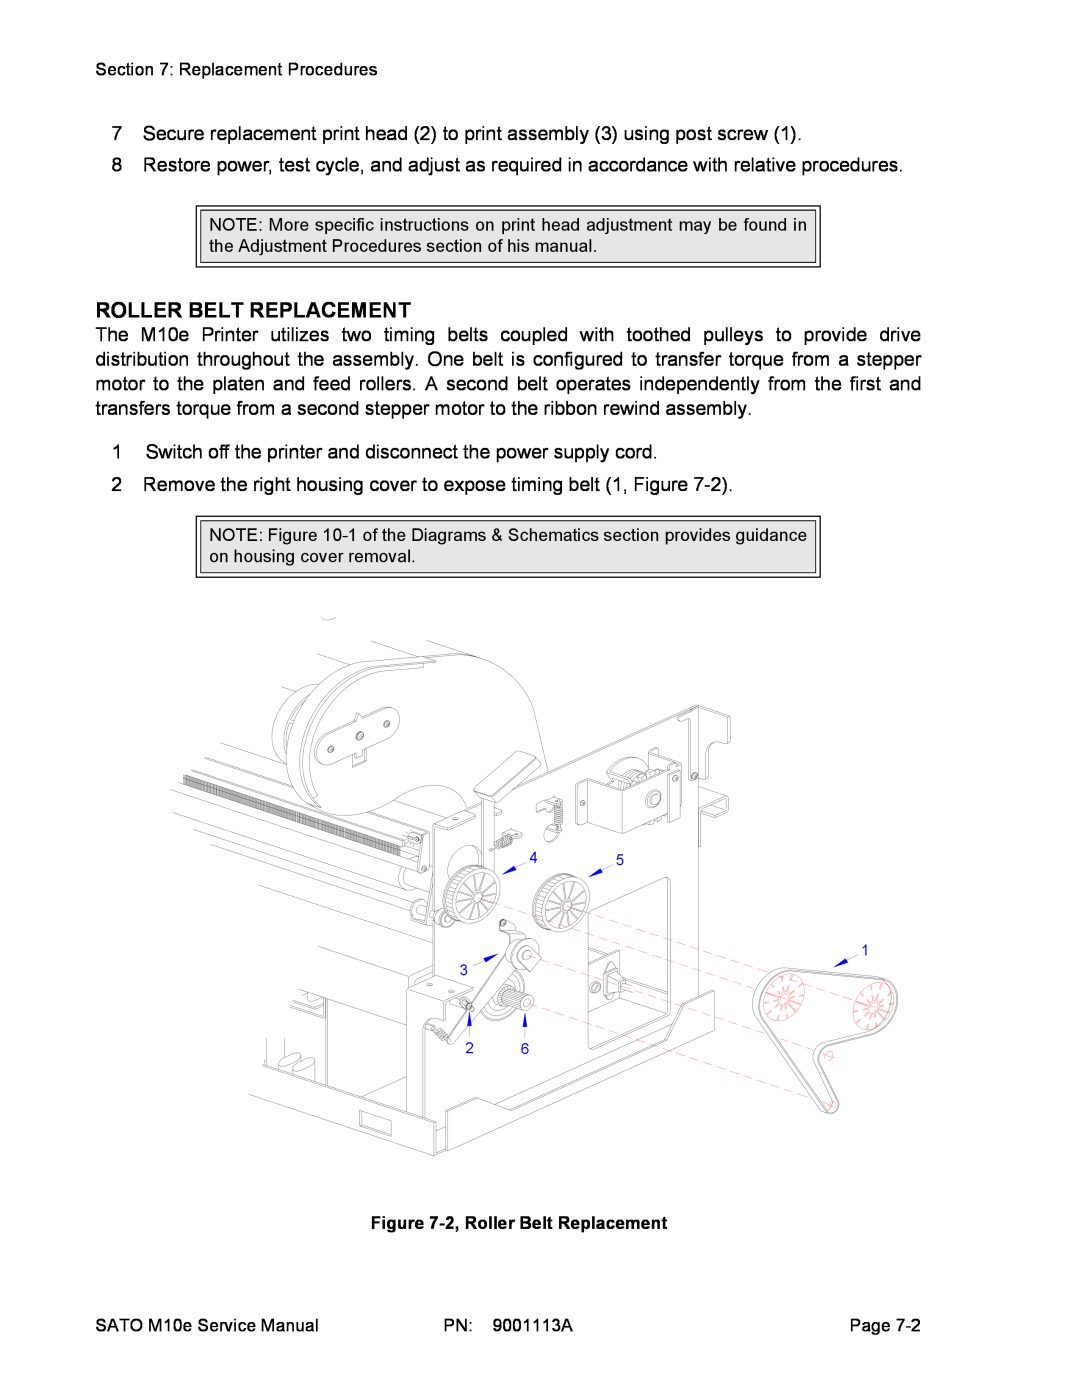 SATO 10e service manual 2, Roller Belt Replacement 